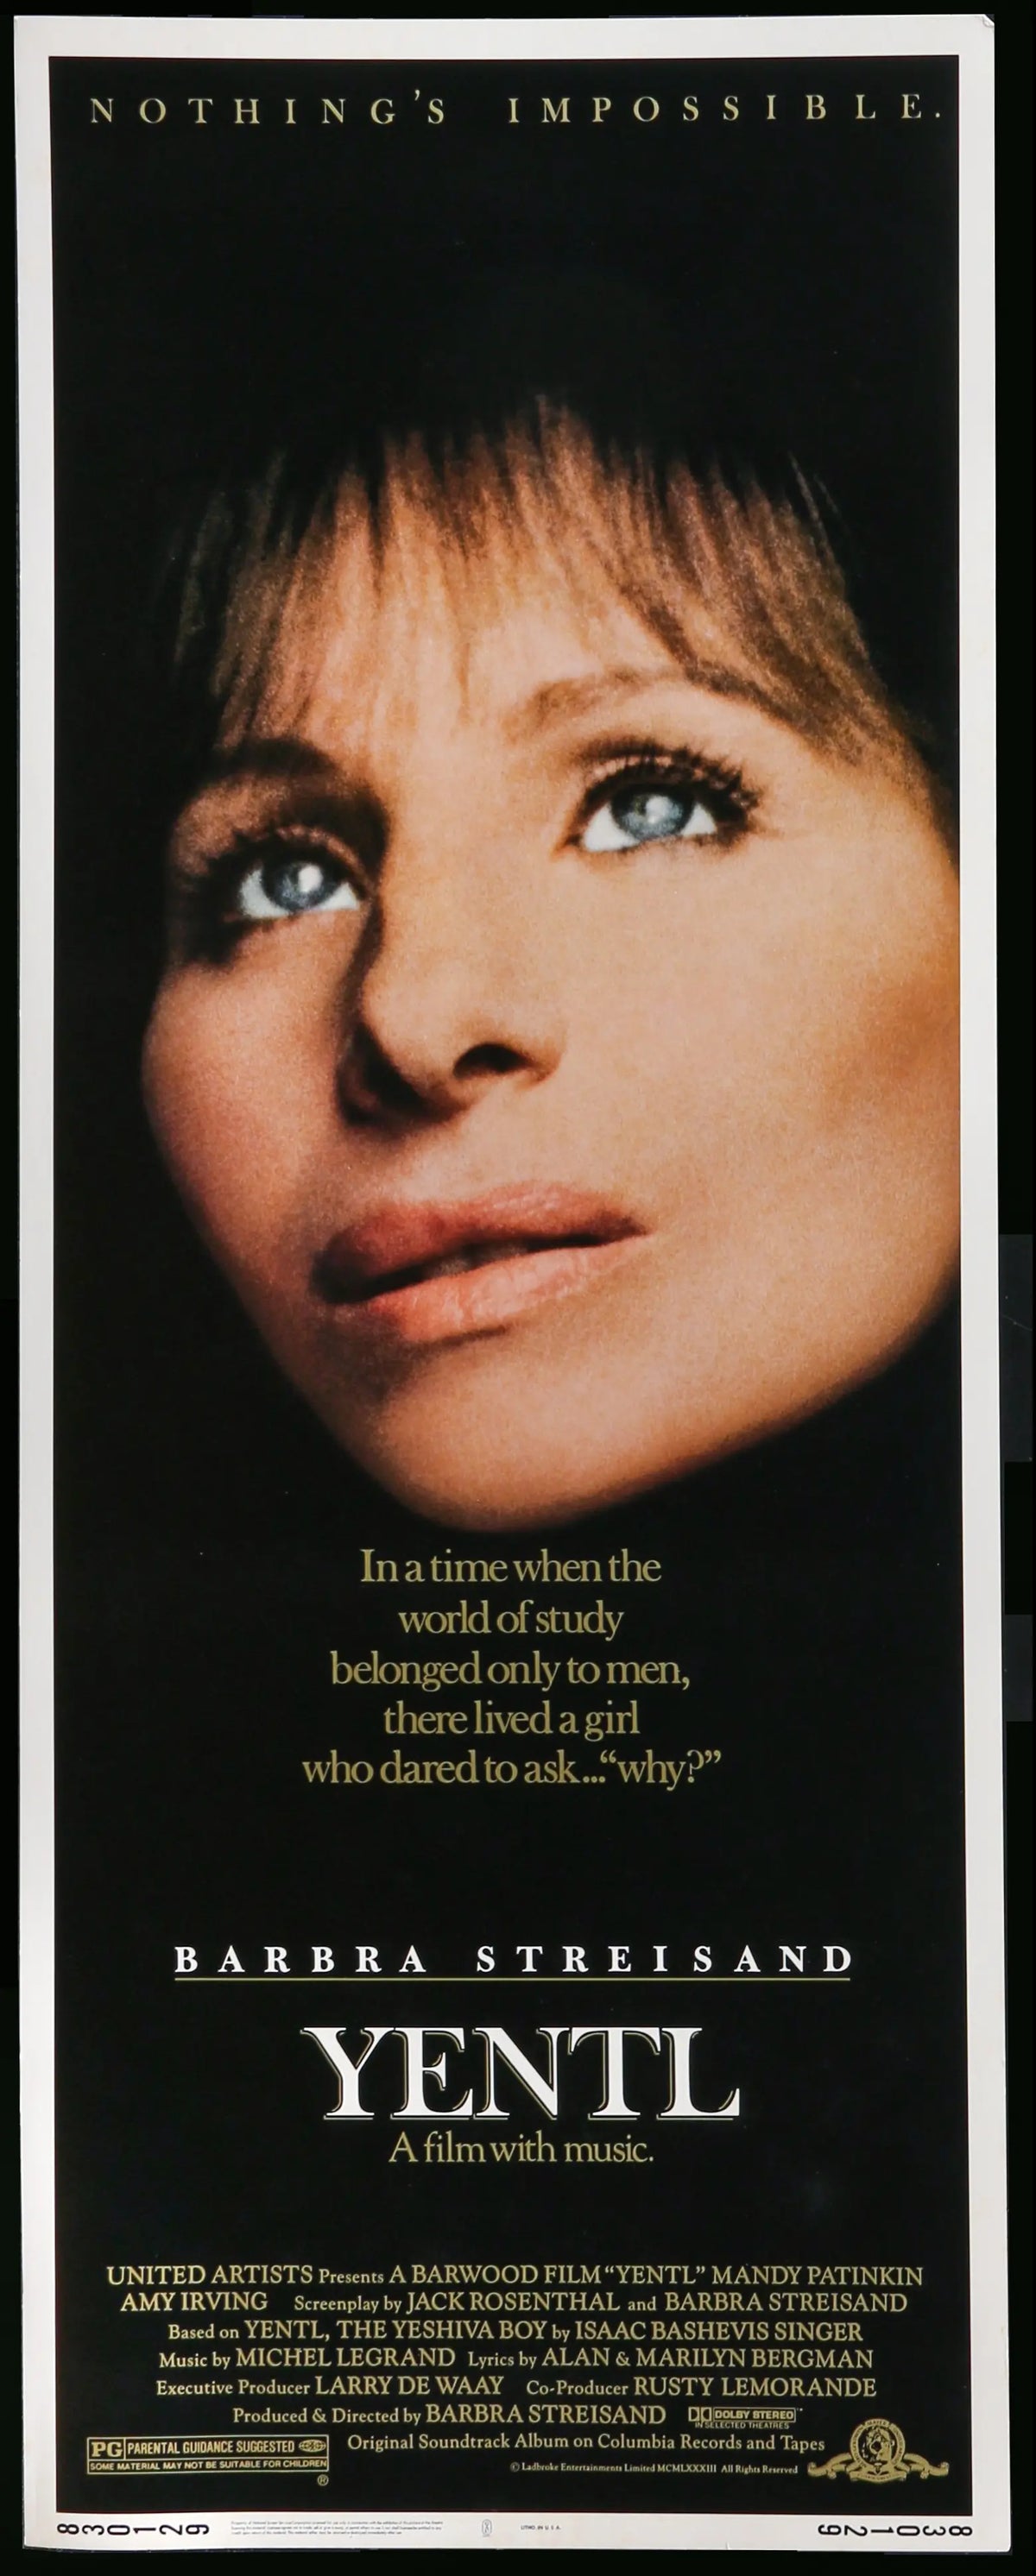 Yentl (1983) original movie poster for sale at Original Film Art